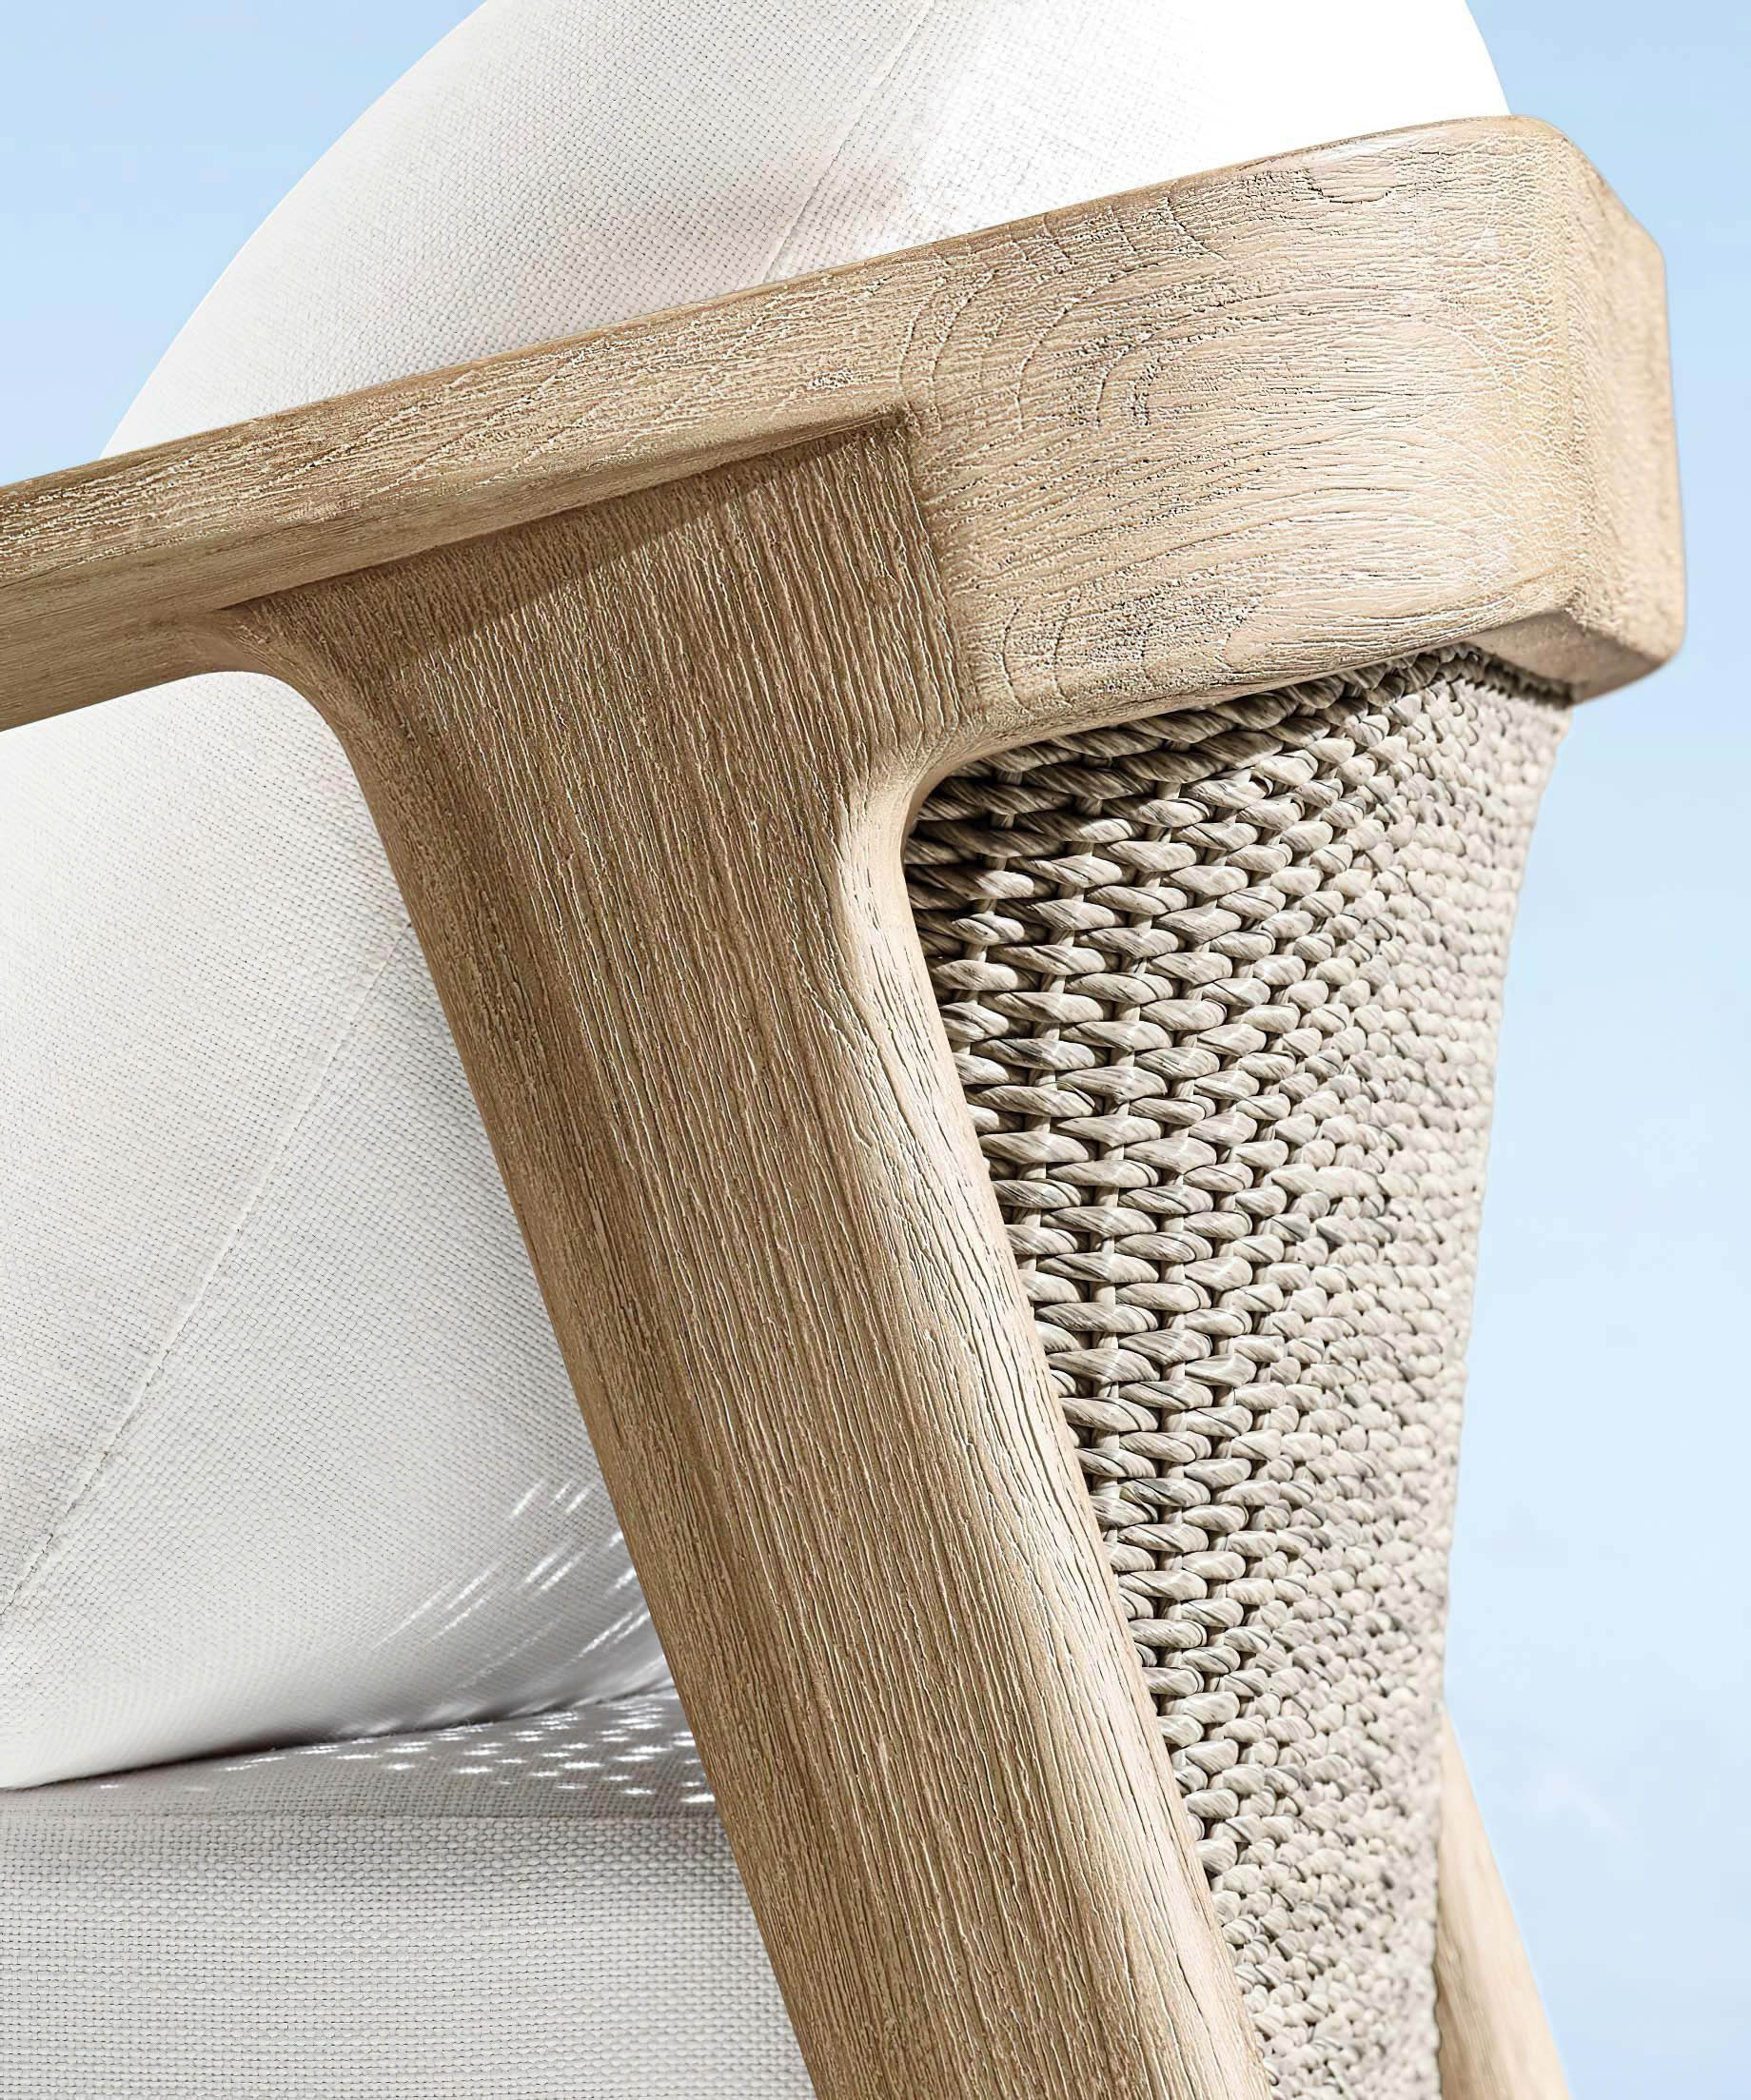 Malta Teak Collection Outdoor Furniture Design for RH - Ramon Esteve - Crafted Premium Teak